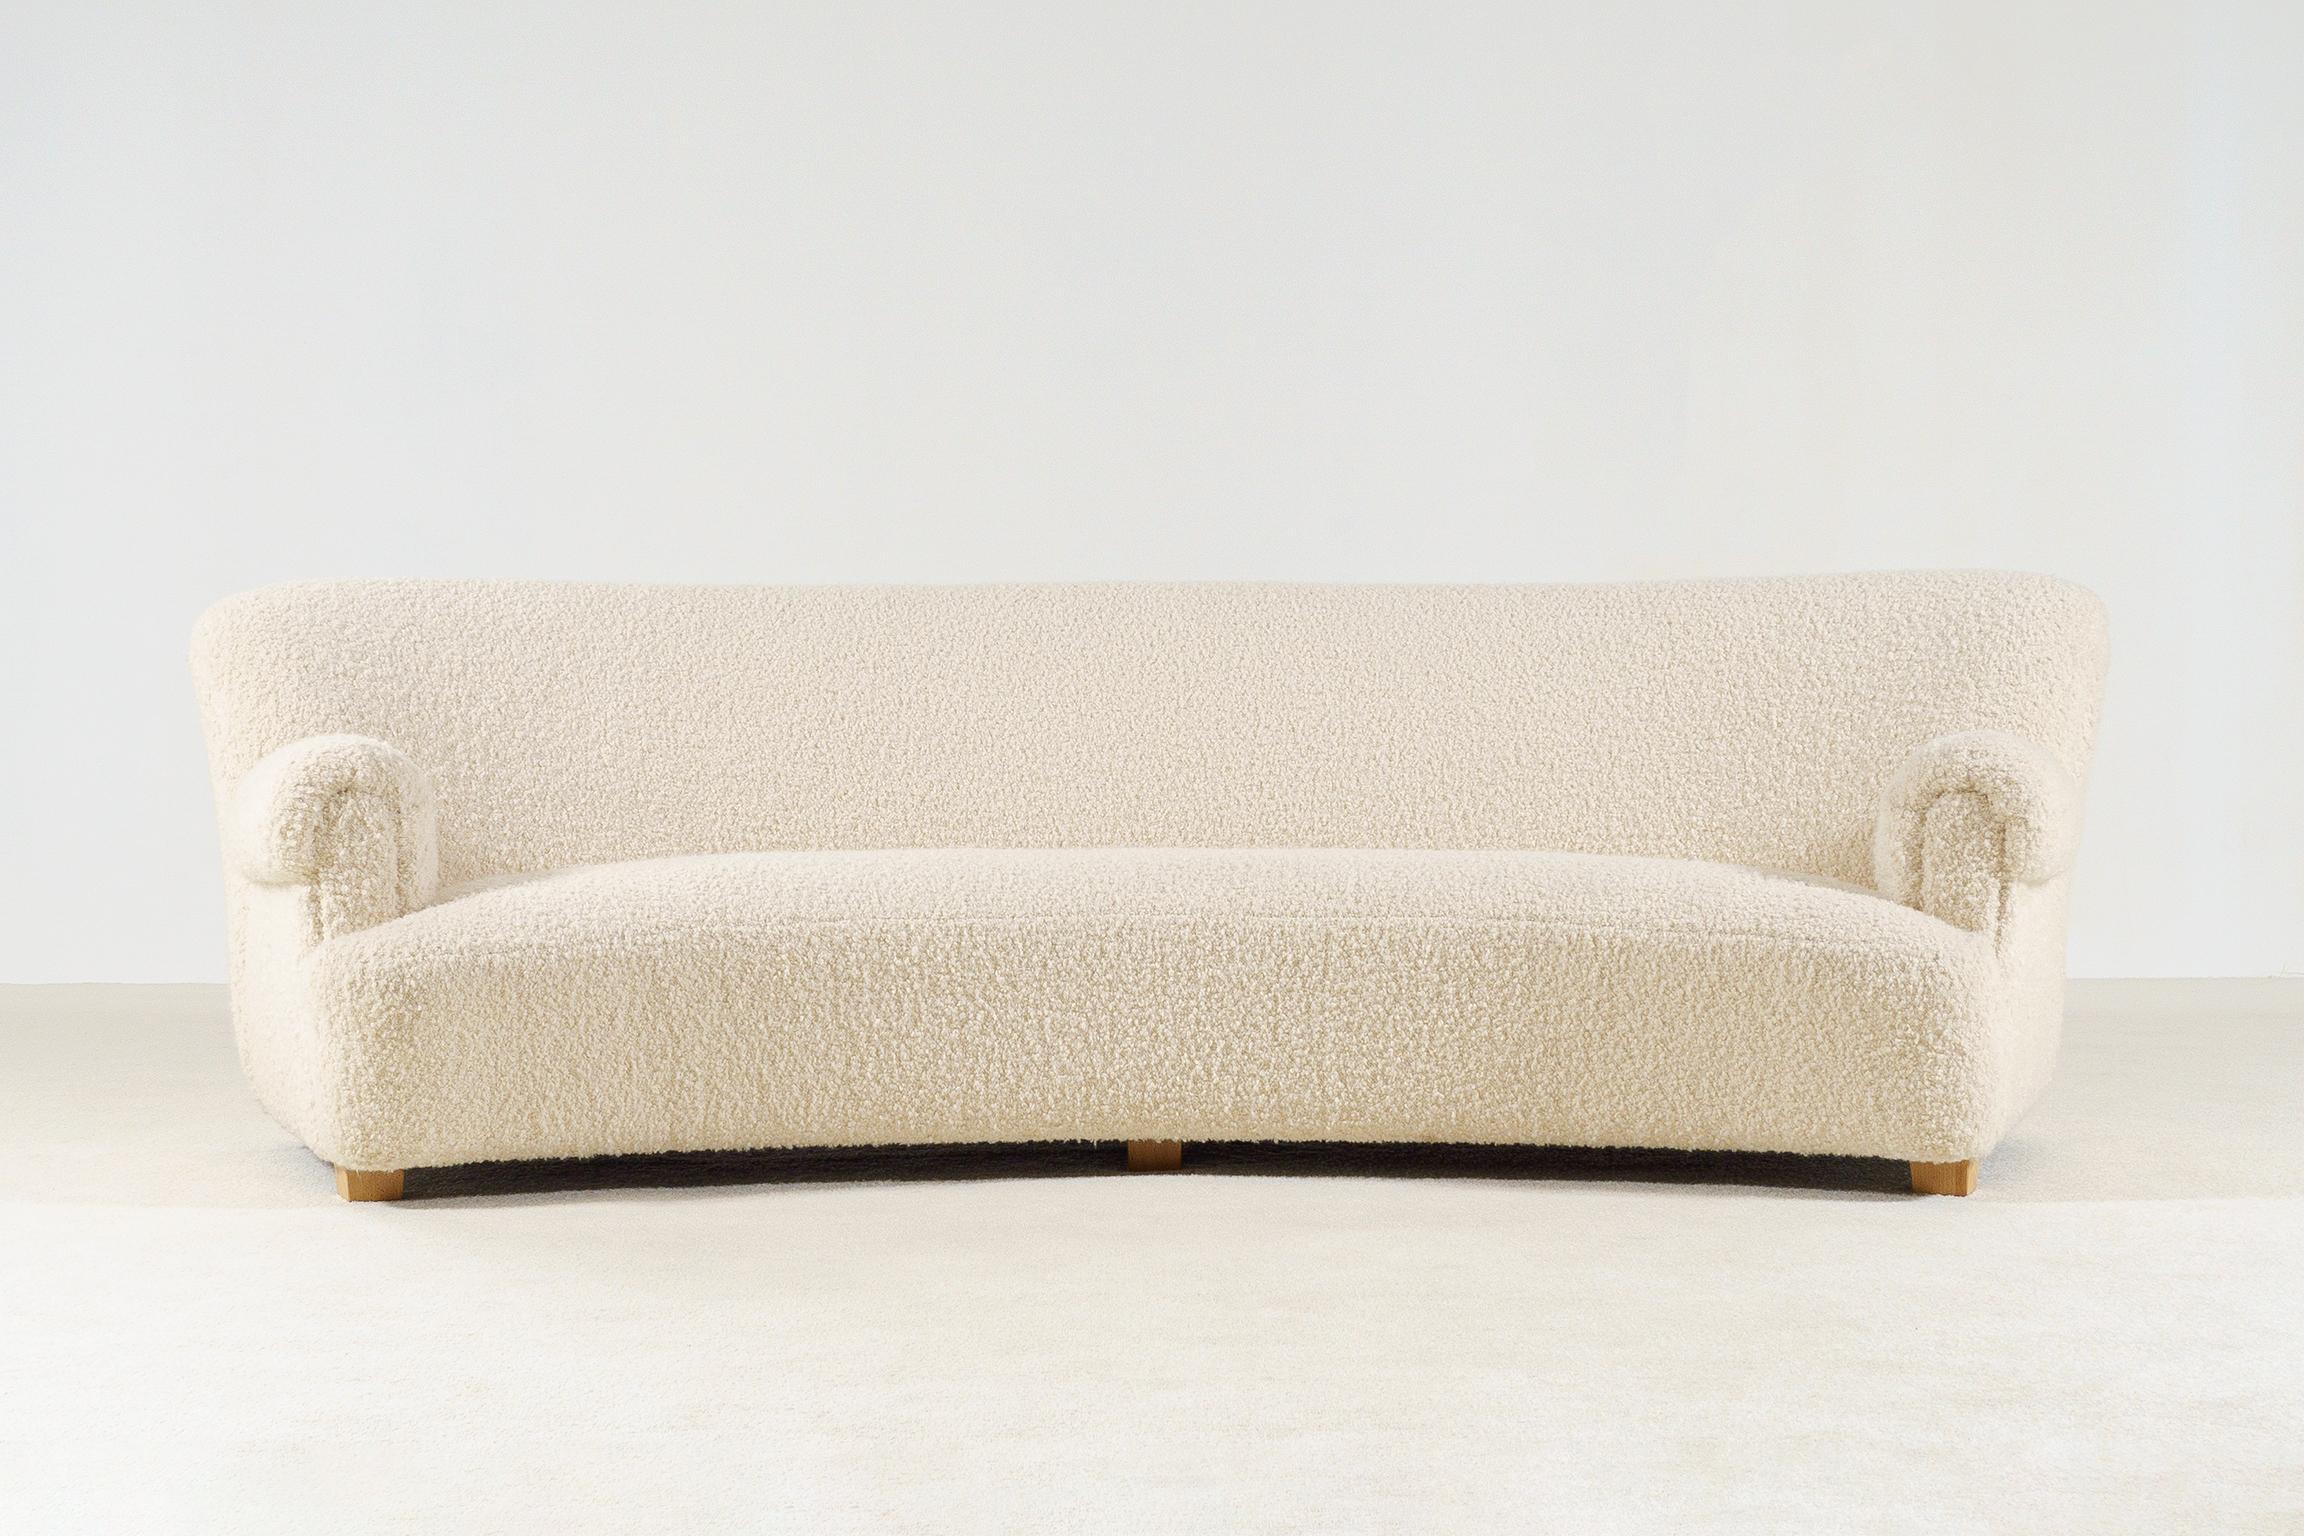 Scandinavian Modern Elegant Four-Seat Danish Curved Sofa, 1940s, New Bouclé Fabric Upholstery